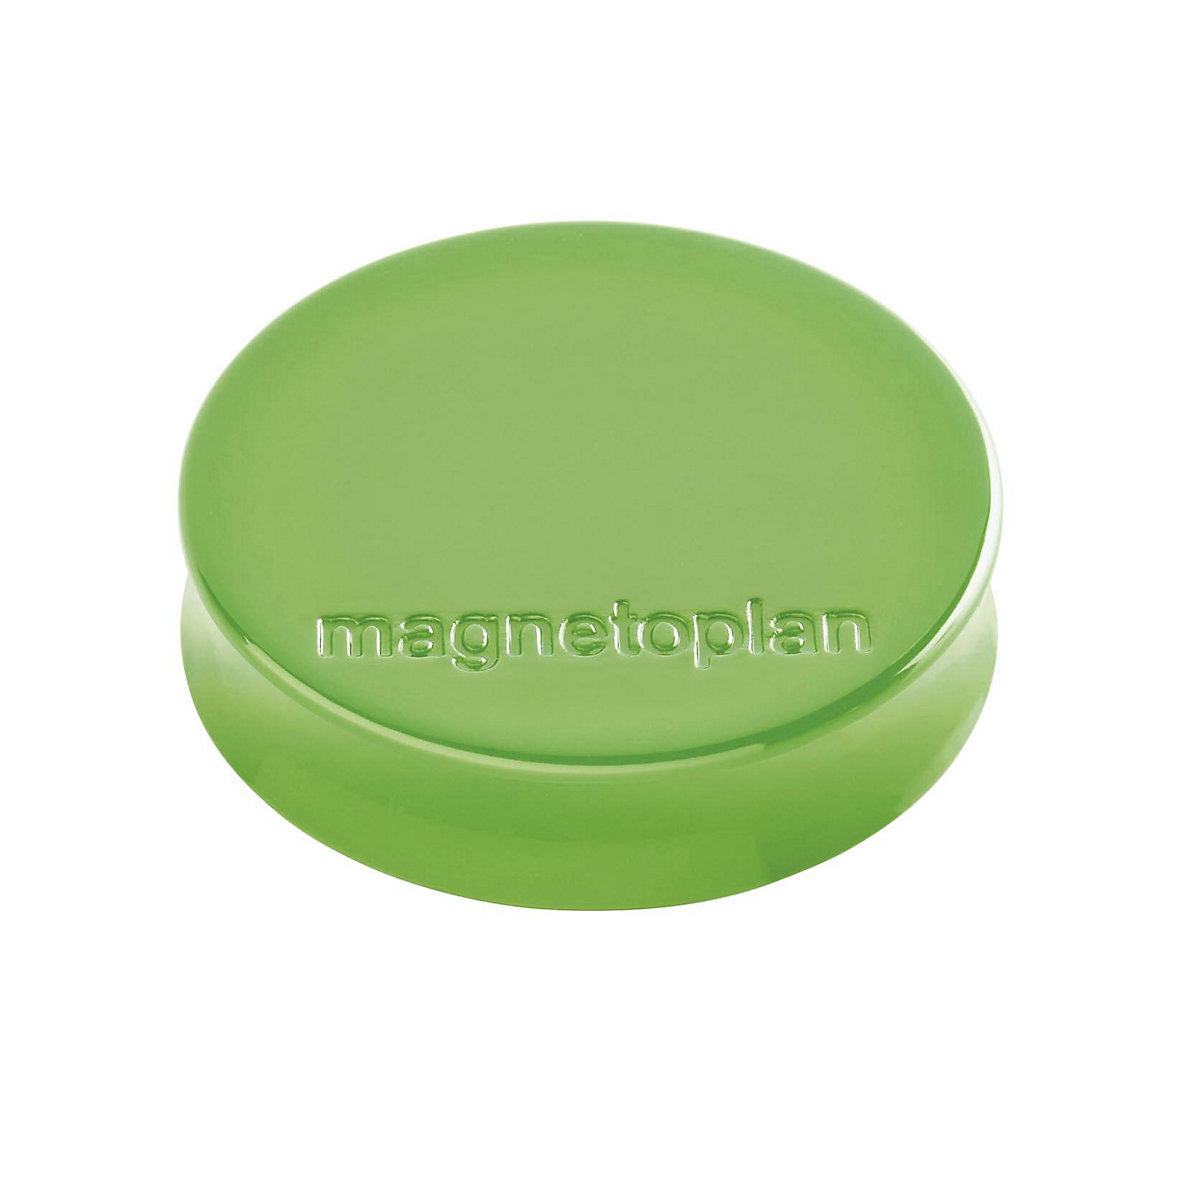 Ergo-Magnet magnetoplan, Ø 30 mm, VE 60 Stk, maigrün-12